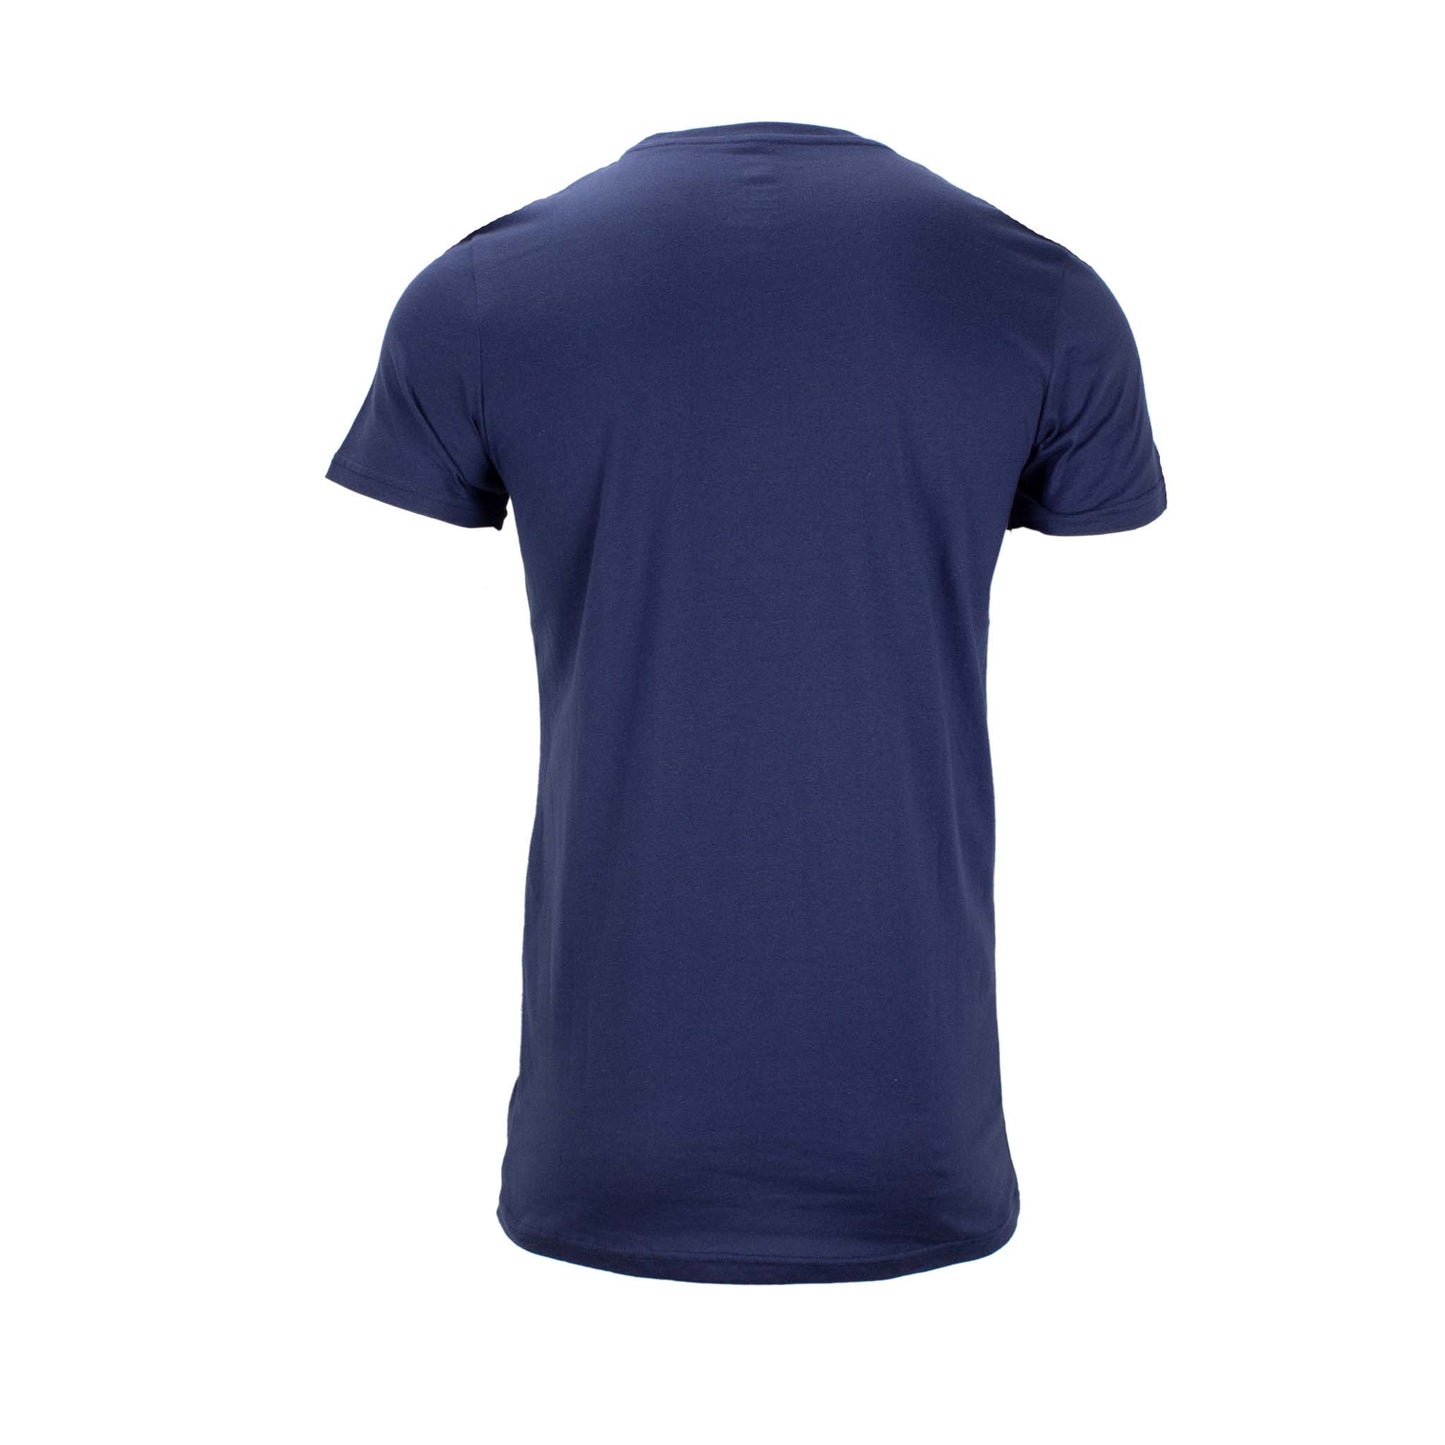 Fanatics NFL Seatlle Seahawks kurzarm Herren T-Shirt blau 1564MNVY1ADSSE-2